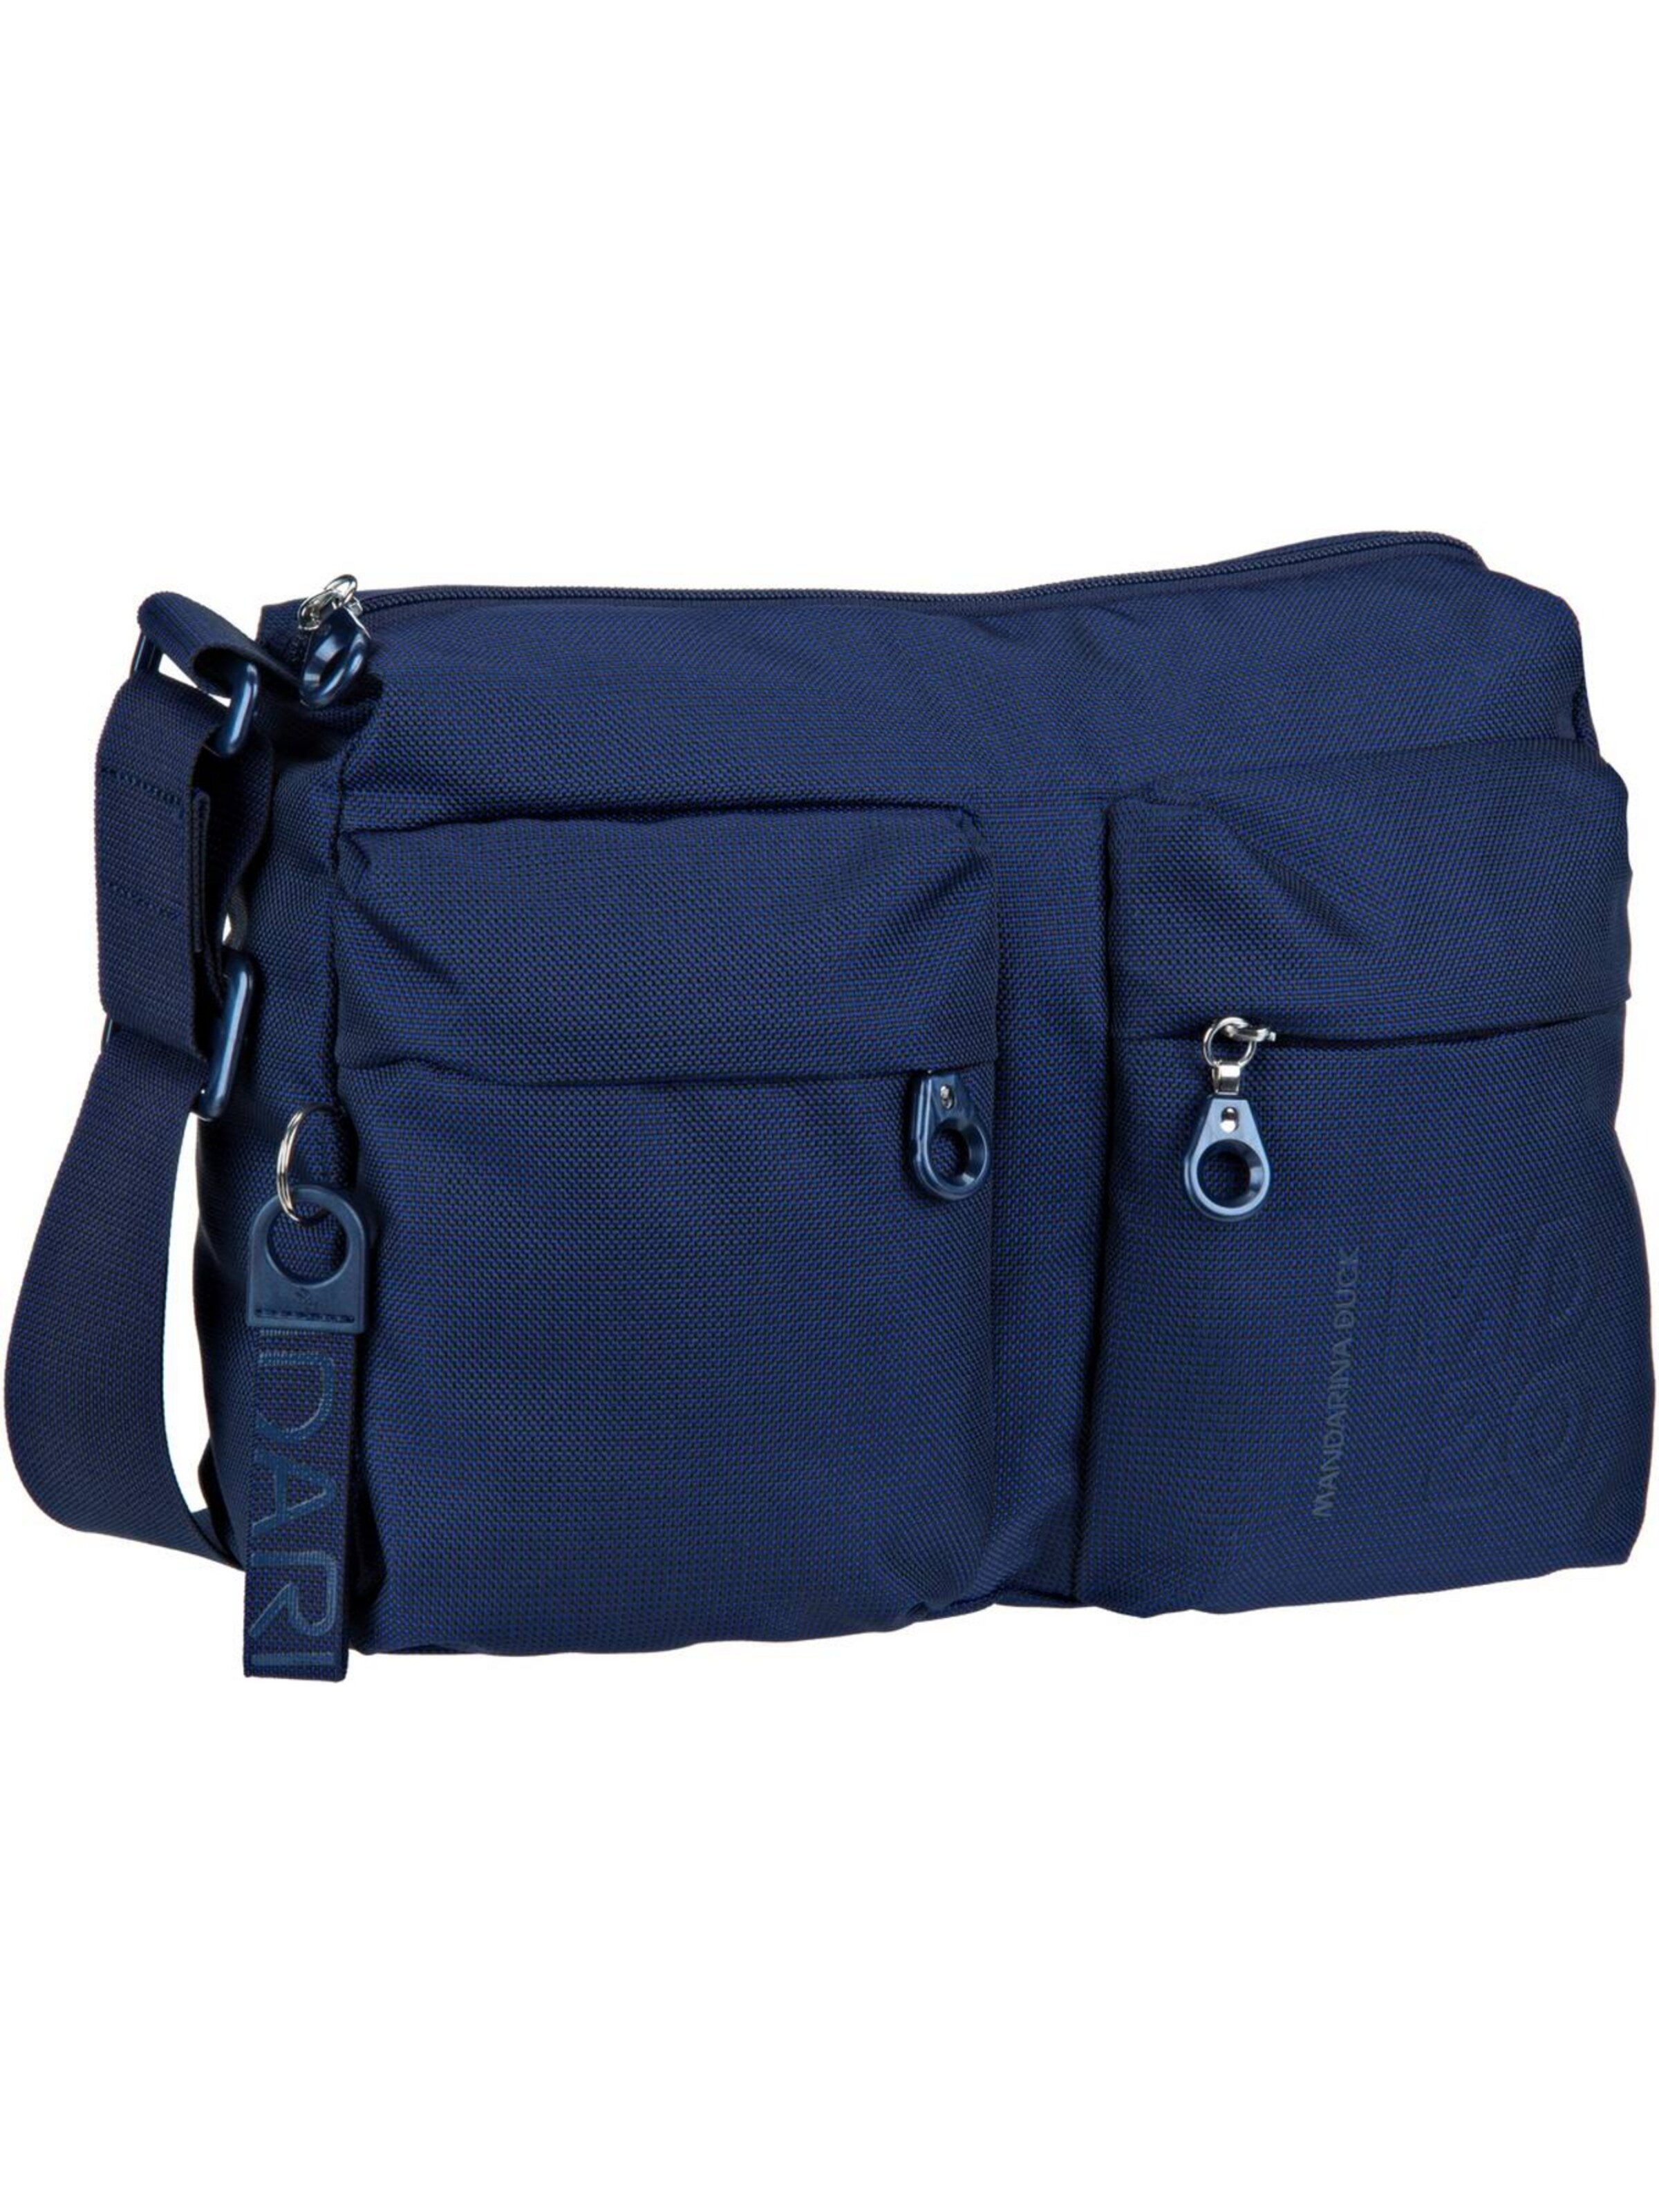 Frauen Taschen & Rucksäcke MANDARINA DUCK Tasche in Blau - DE52946